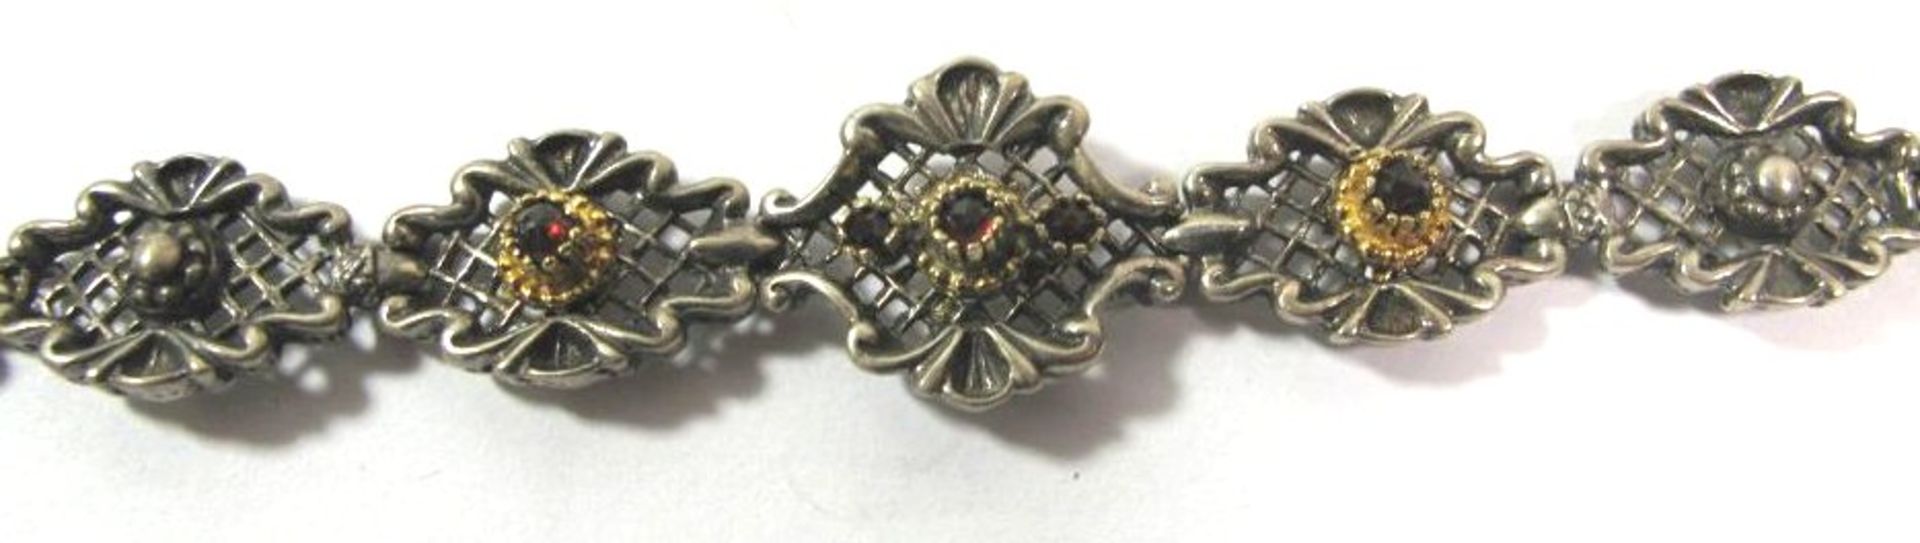 Armband, 925er Silber, Granatbesatz, 25,2g, L-20cm. - Bild 2 aus 2